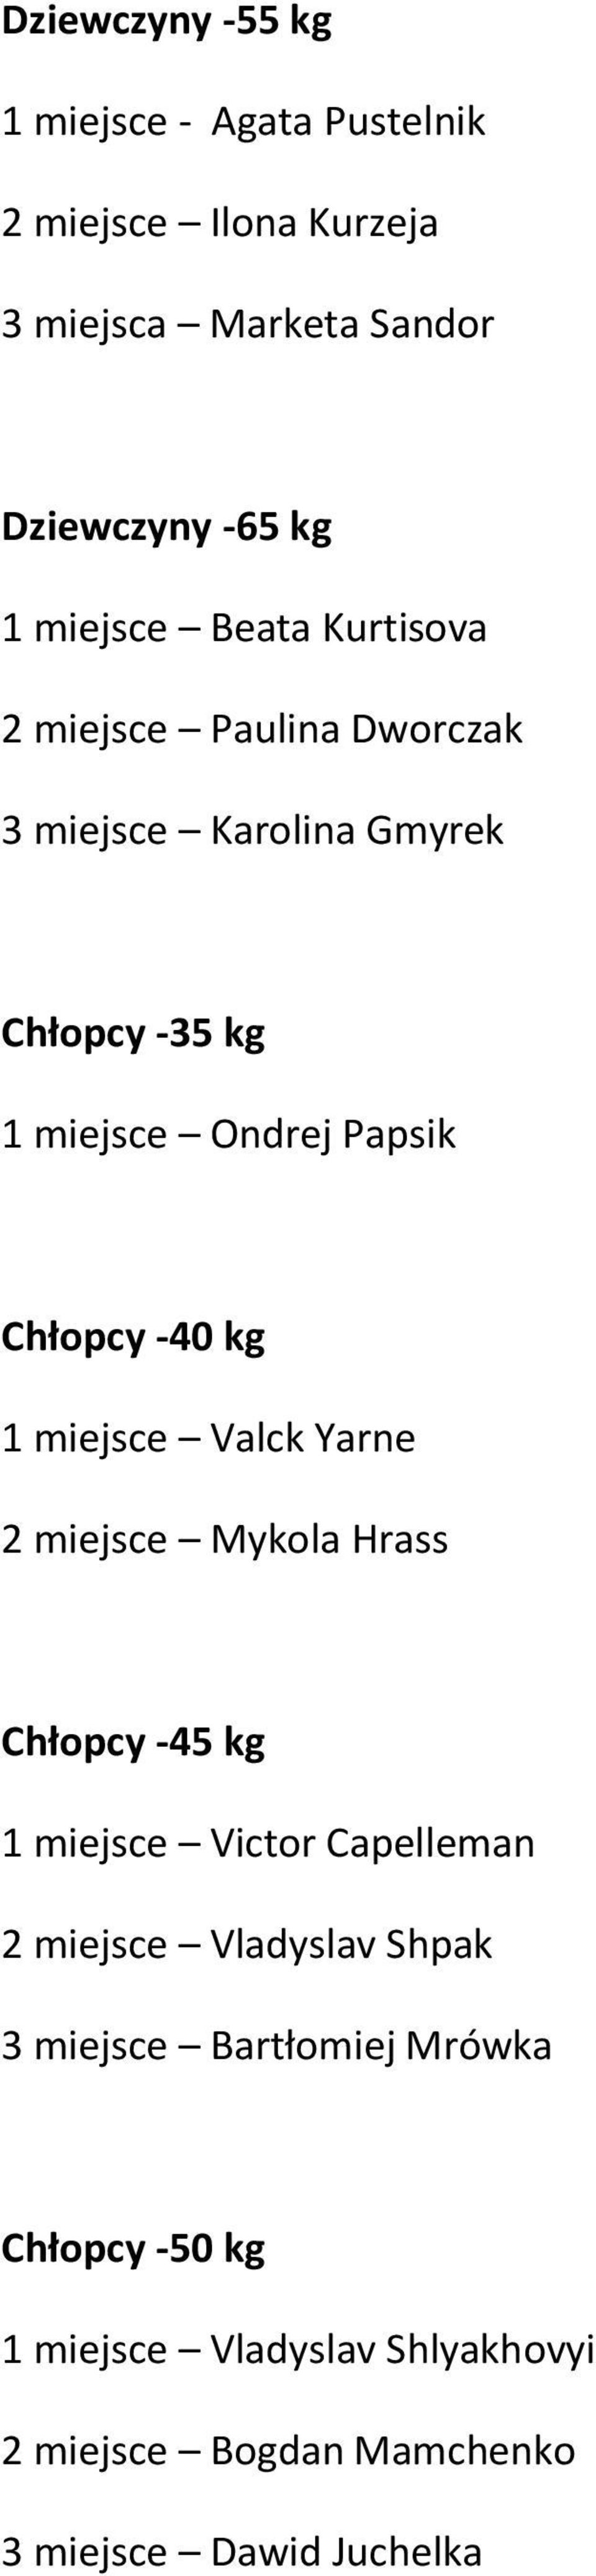 Chłopcy -40 kg 1 miejsce Valck Yarne 2 miejsce Mykola Hrass Chłopcy -45 kg 1 miejsce Victor Capelleman 2 miejsce